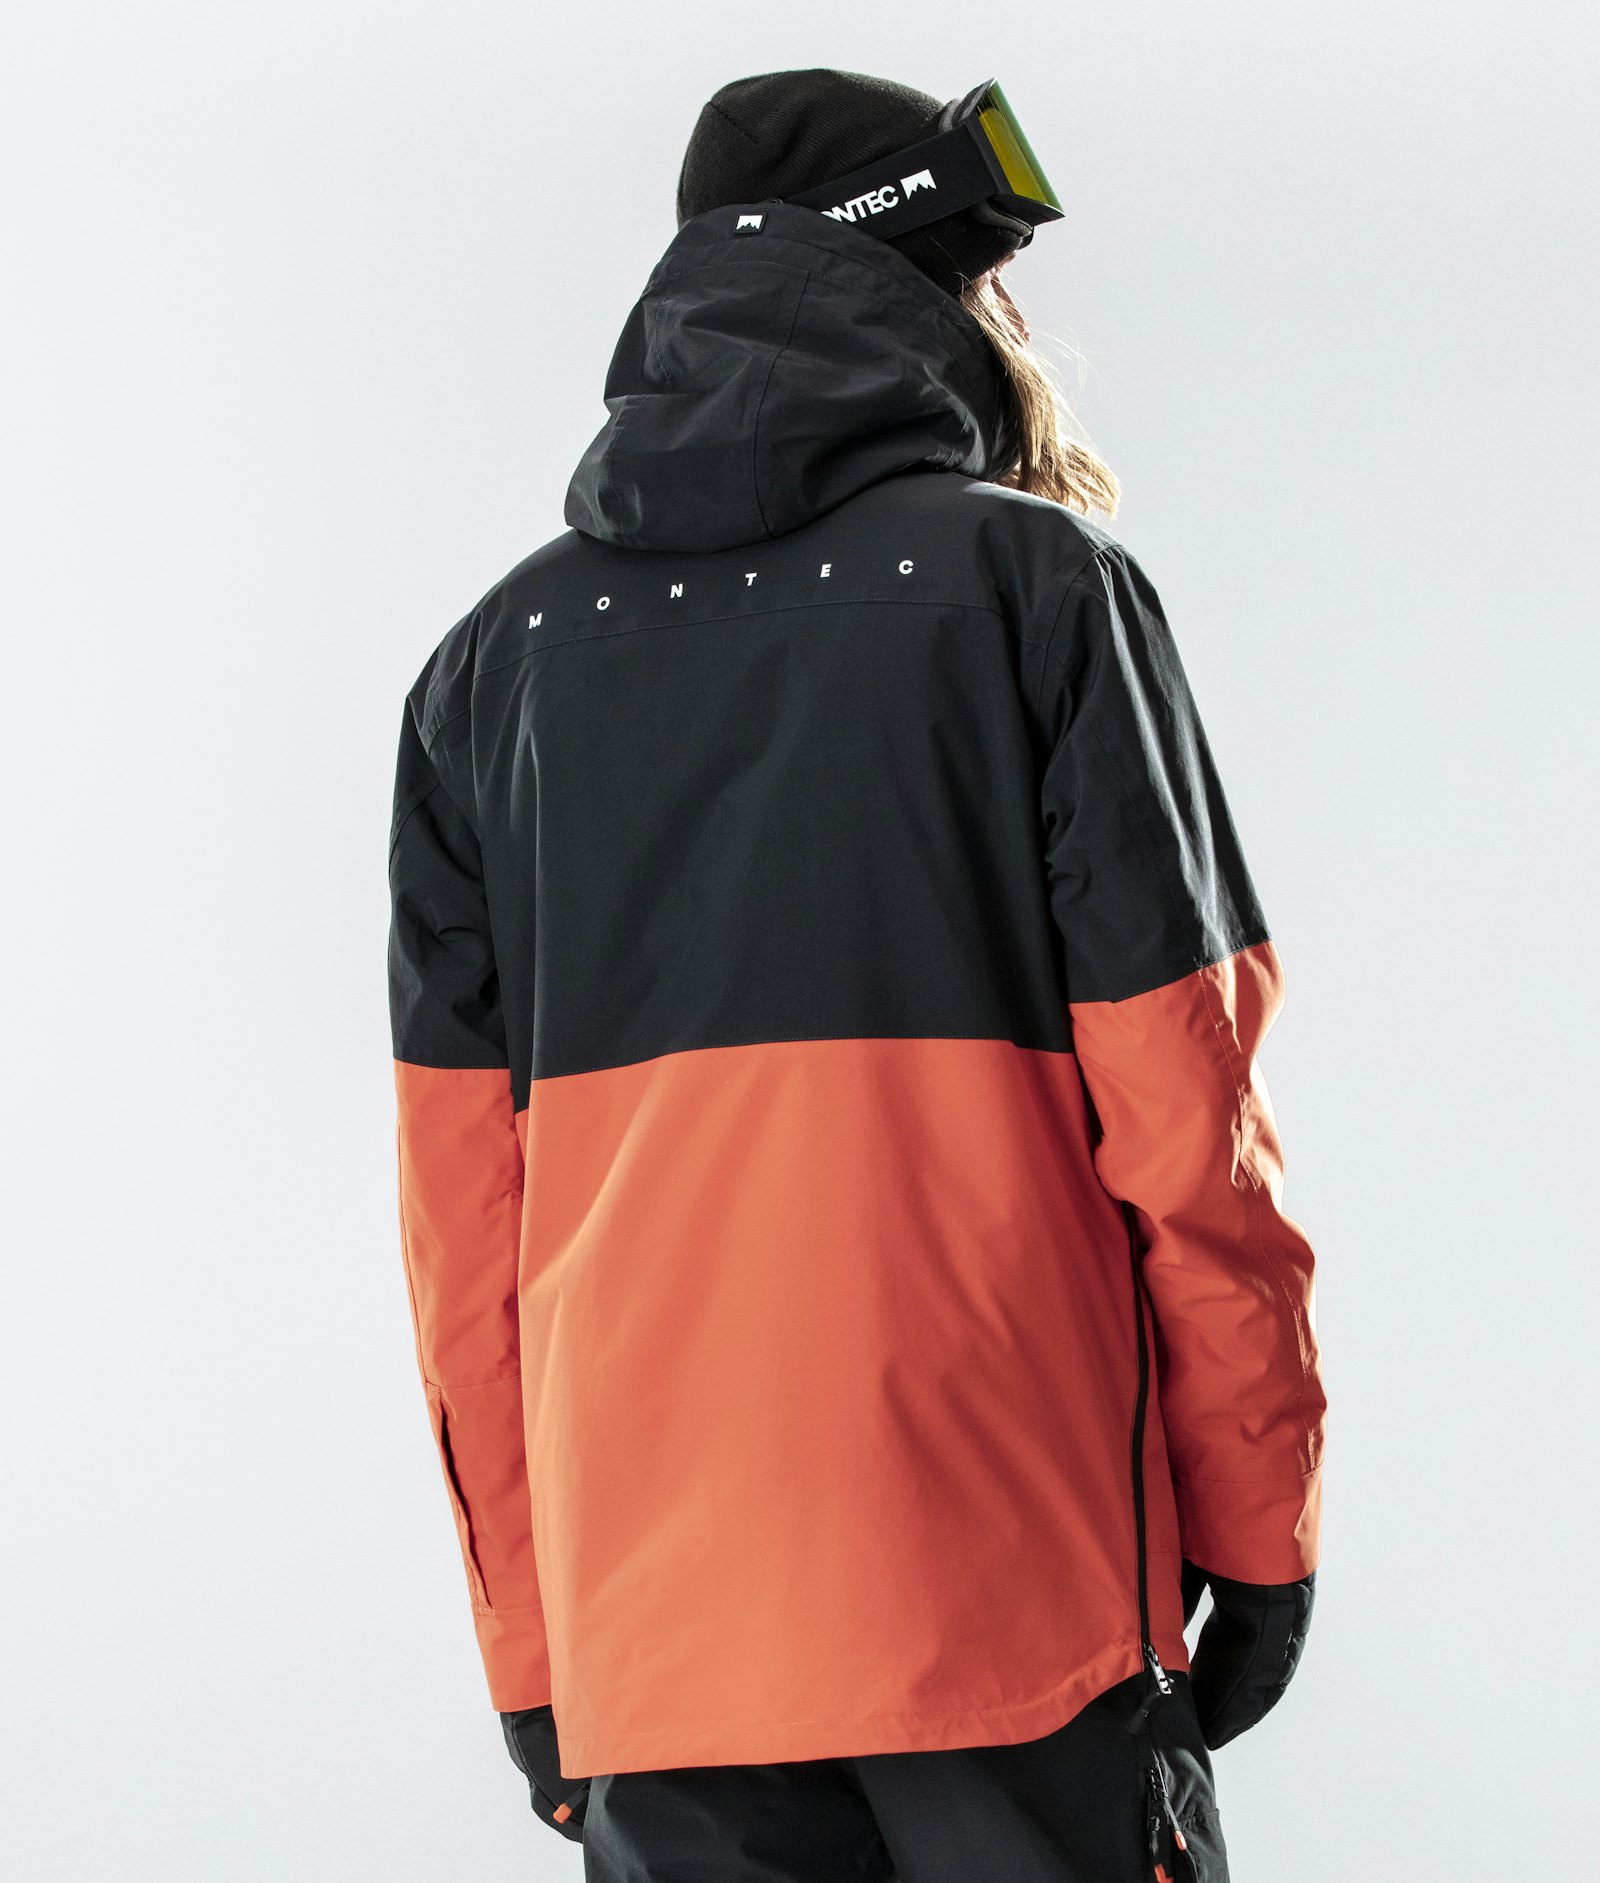 Dune 2020 Snowboardjakke Herre Black/Orange